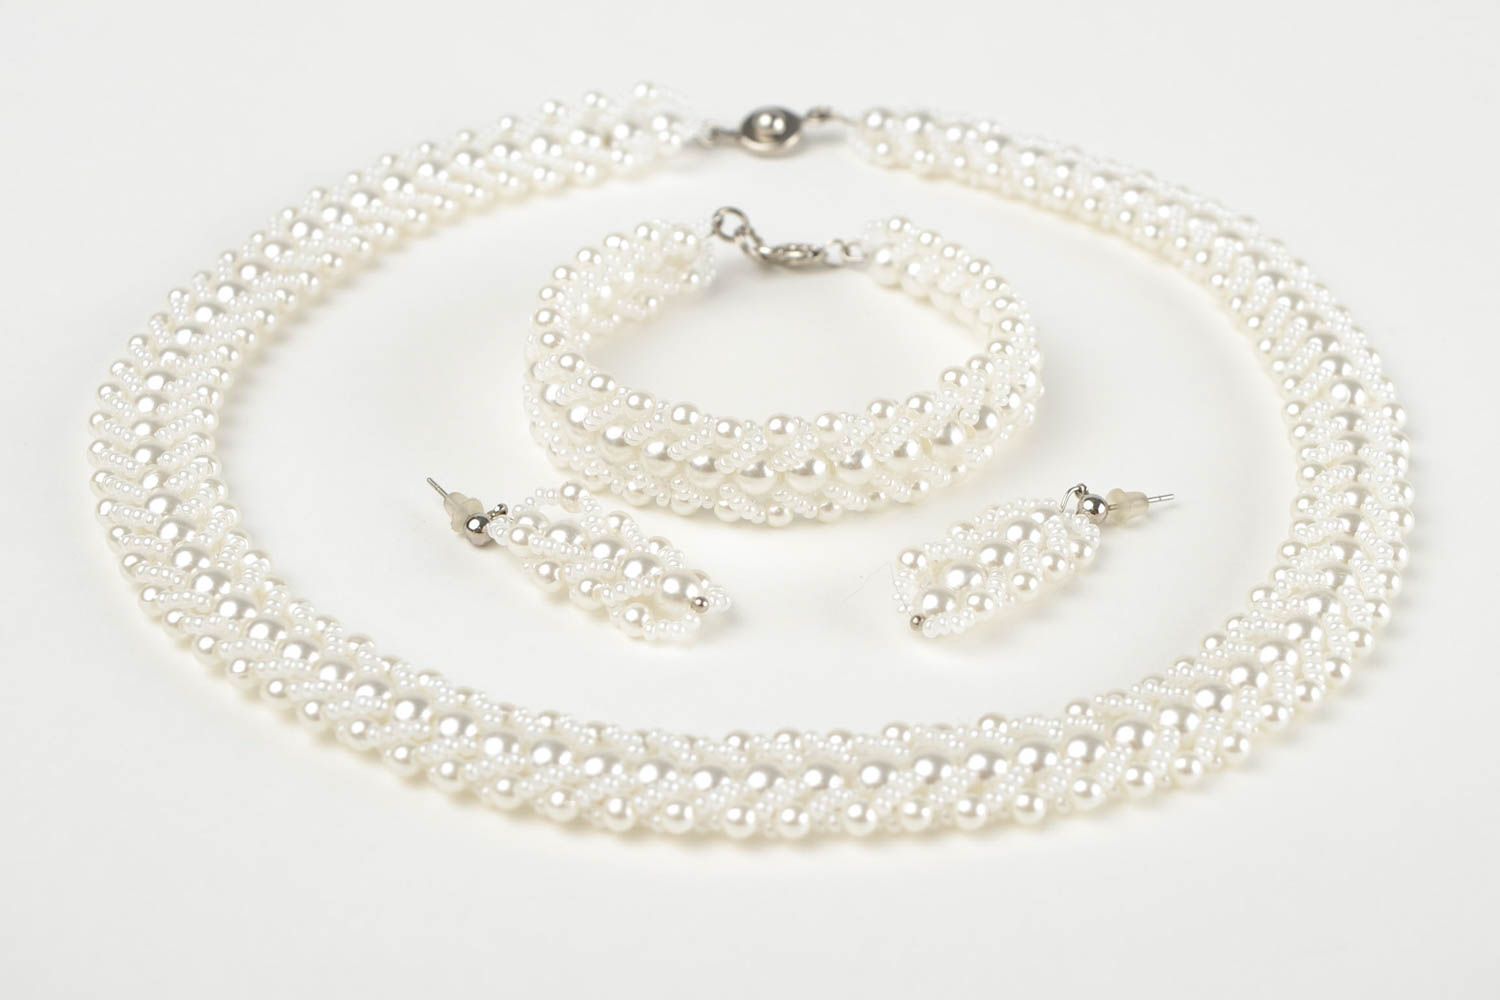 Beaded necklace, earrings and bracelet designer handmade bijouterie accesories photo 5